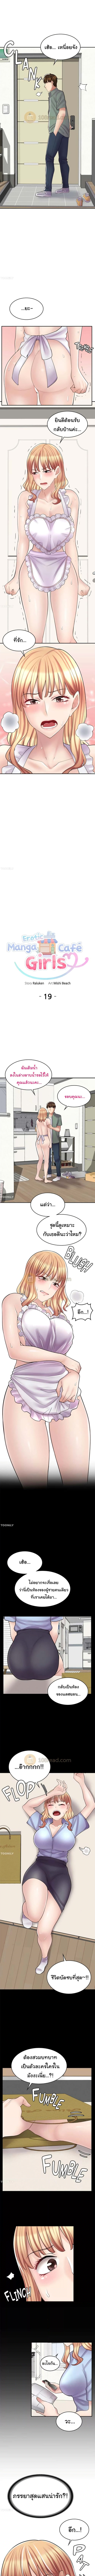 Erotic Manga Café Girls 19 (1)